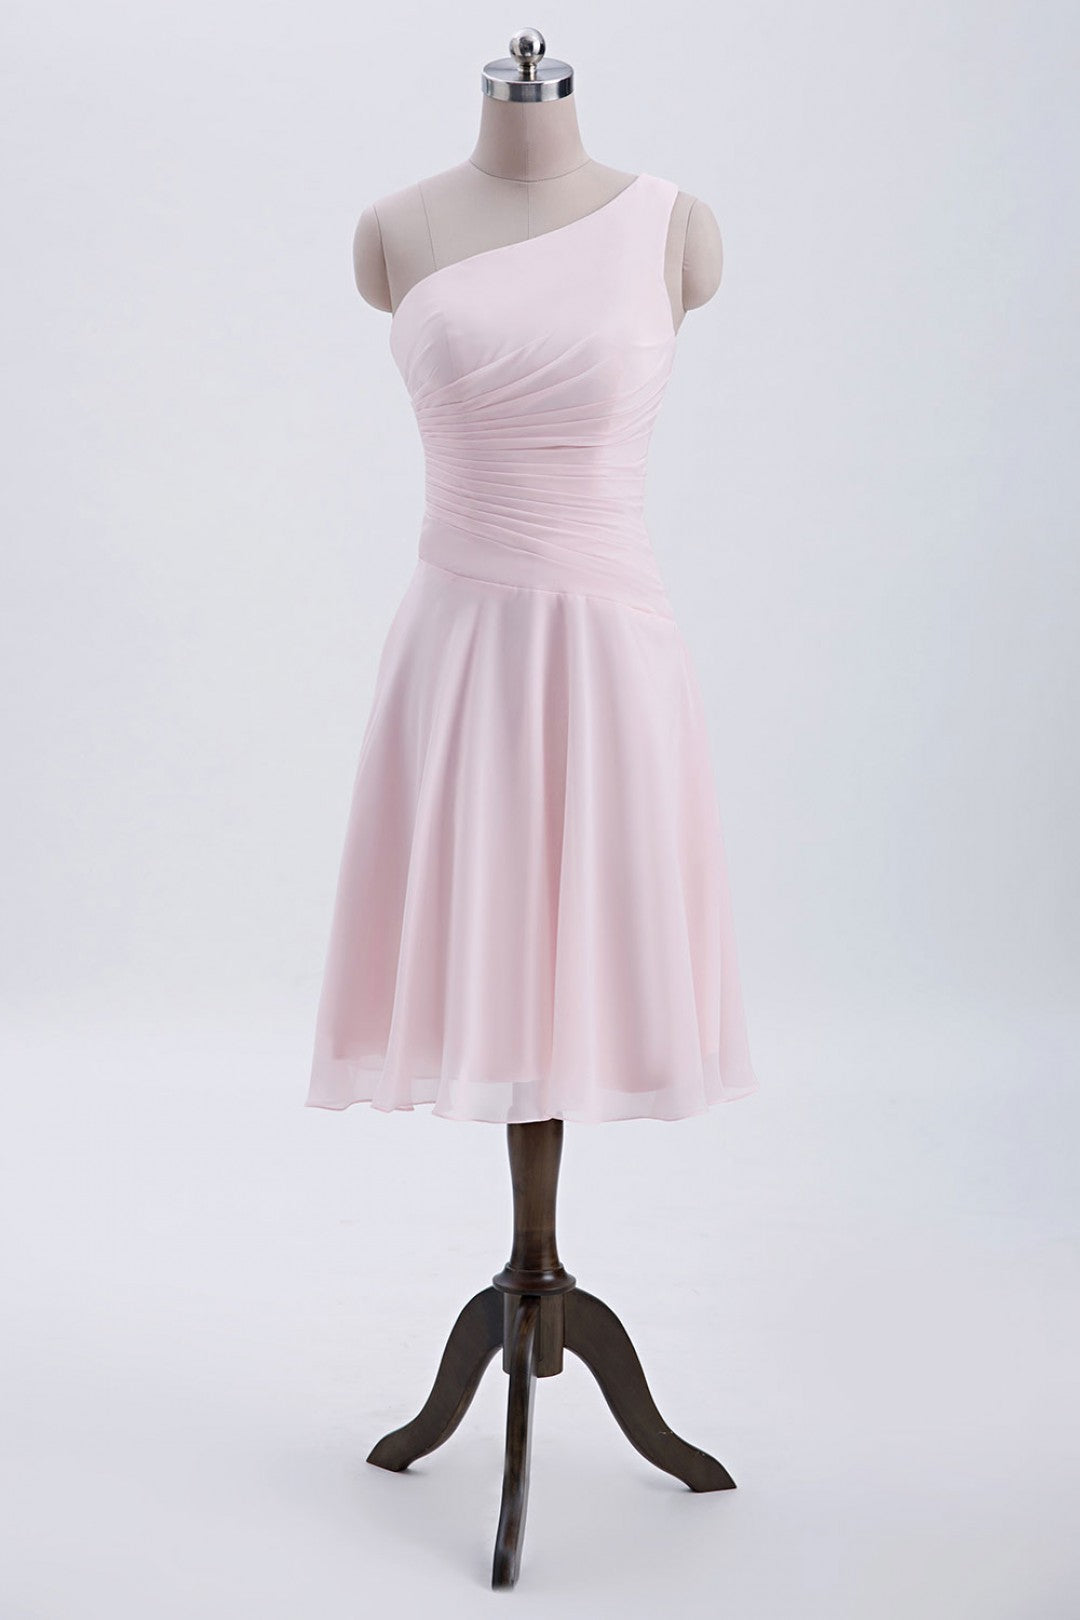 Short Pink One Shoulder Chiffon Homecoming Dress